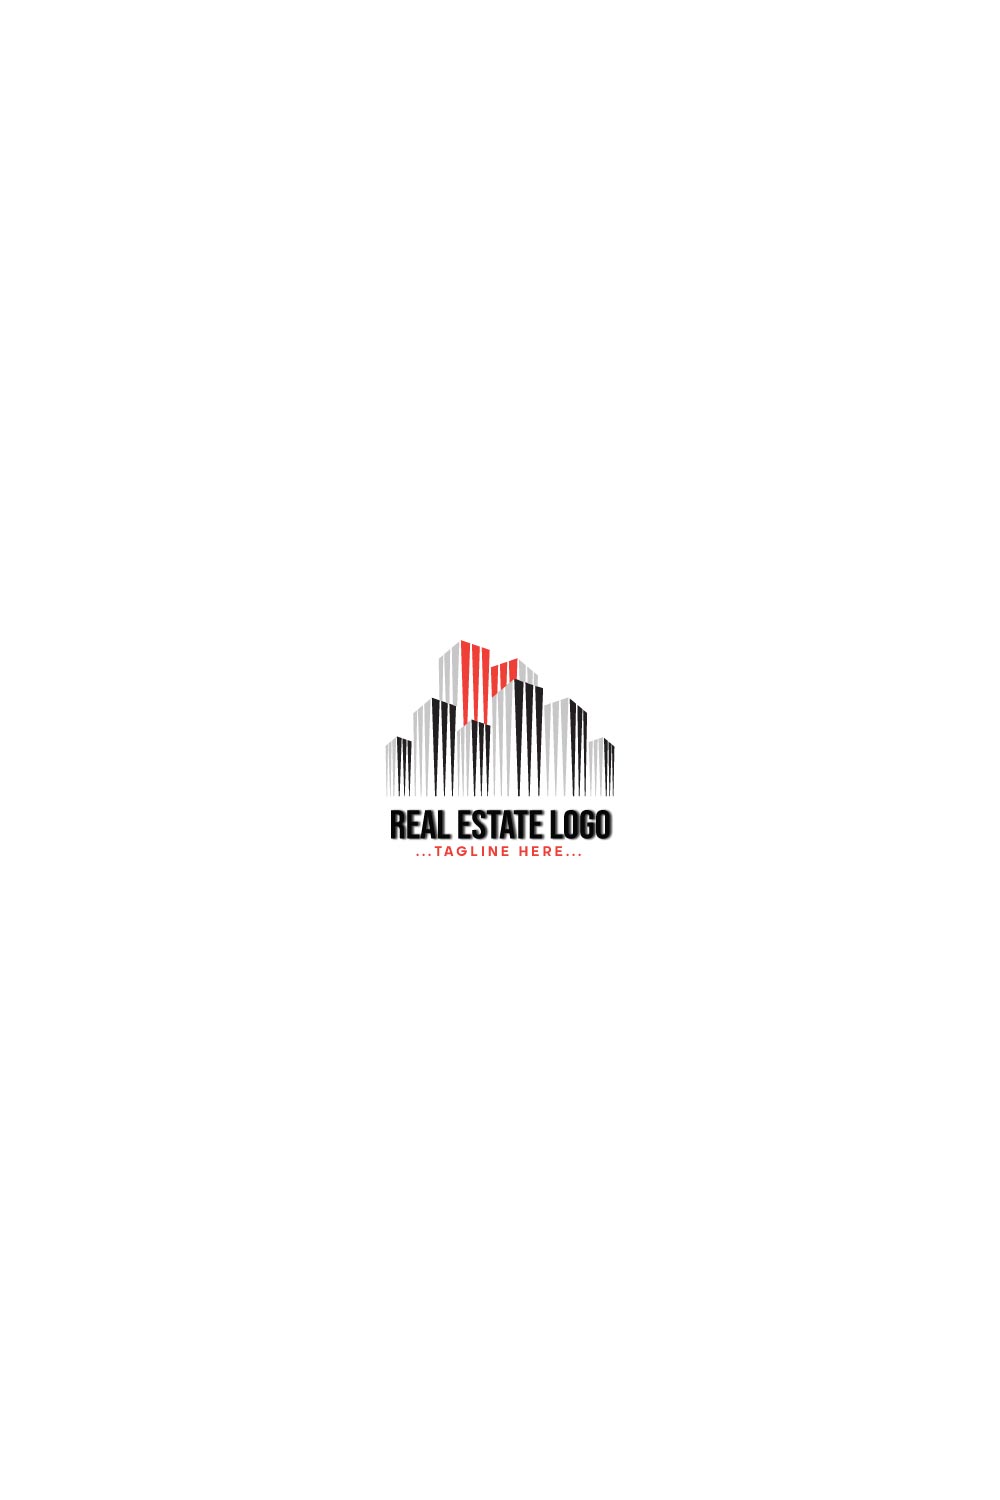 Real Estate Logo Pinterest image.